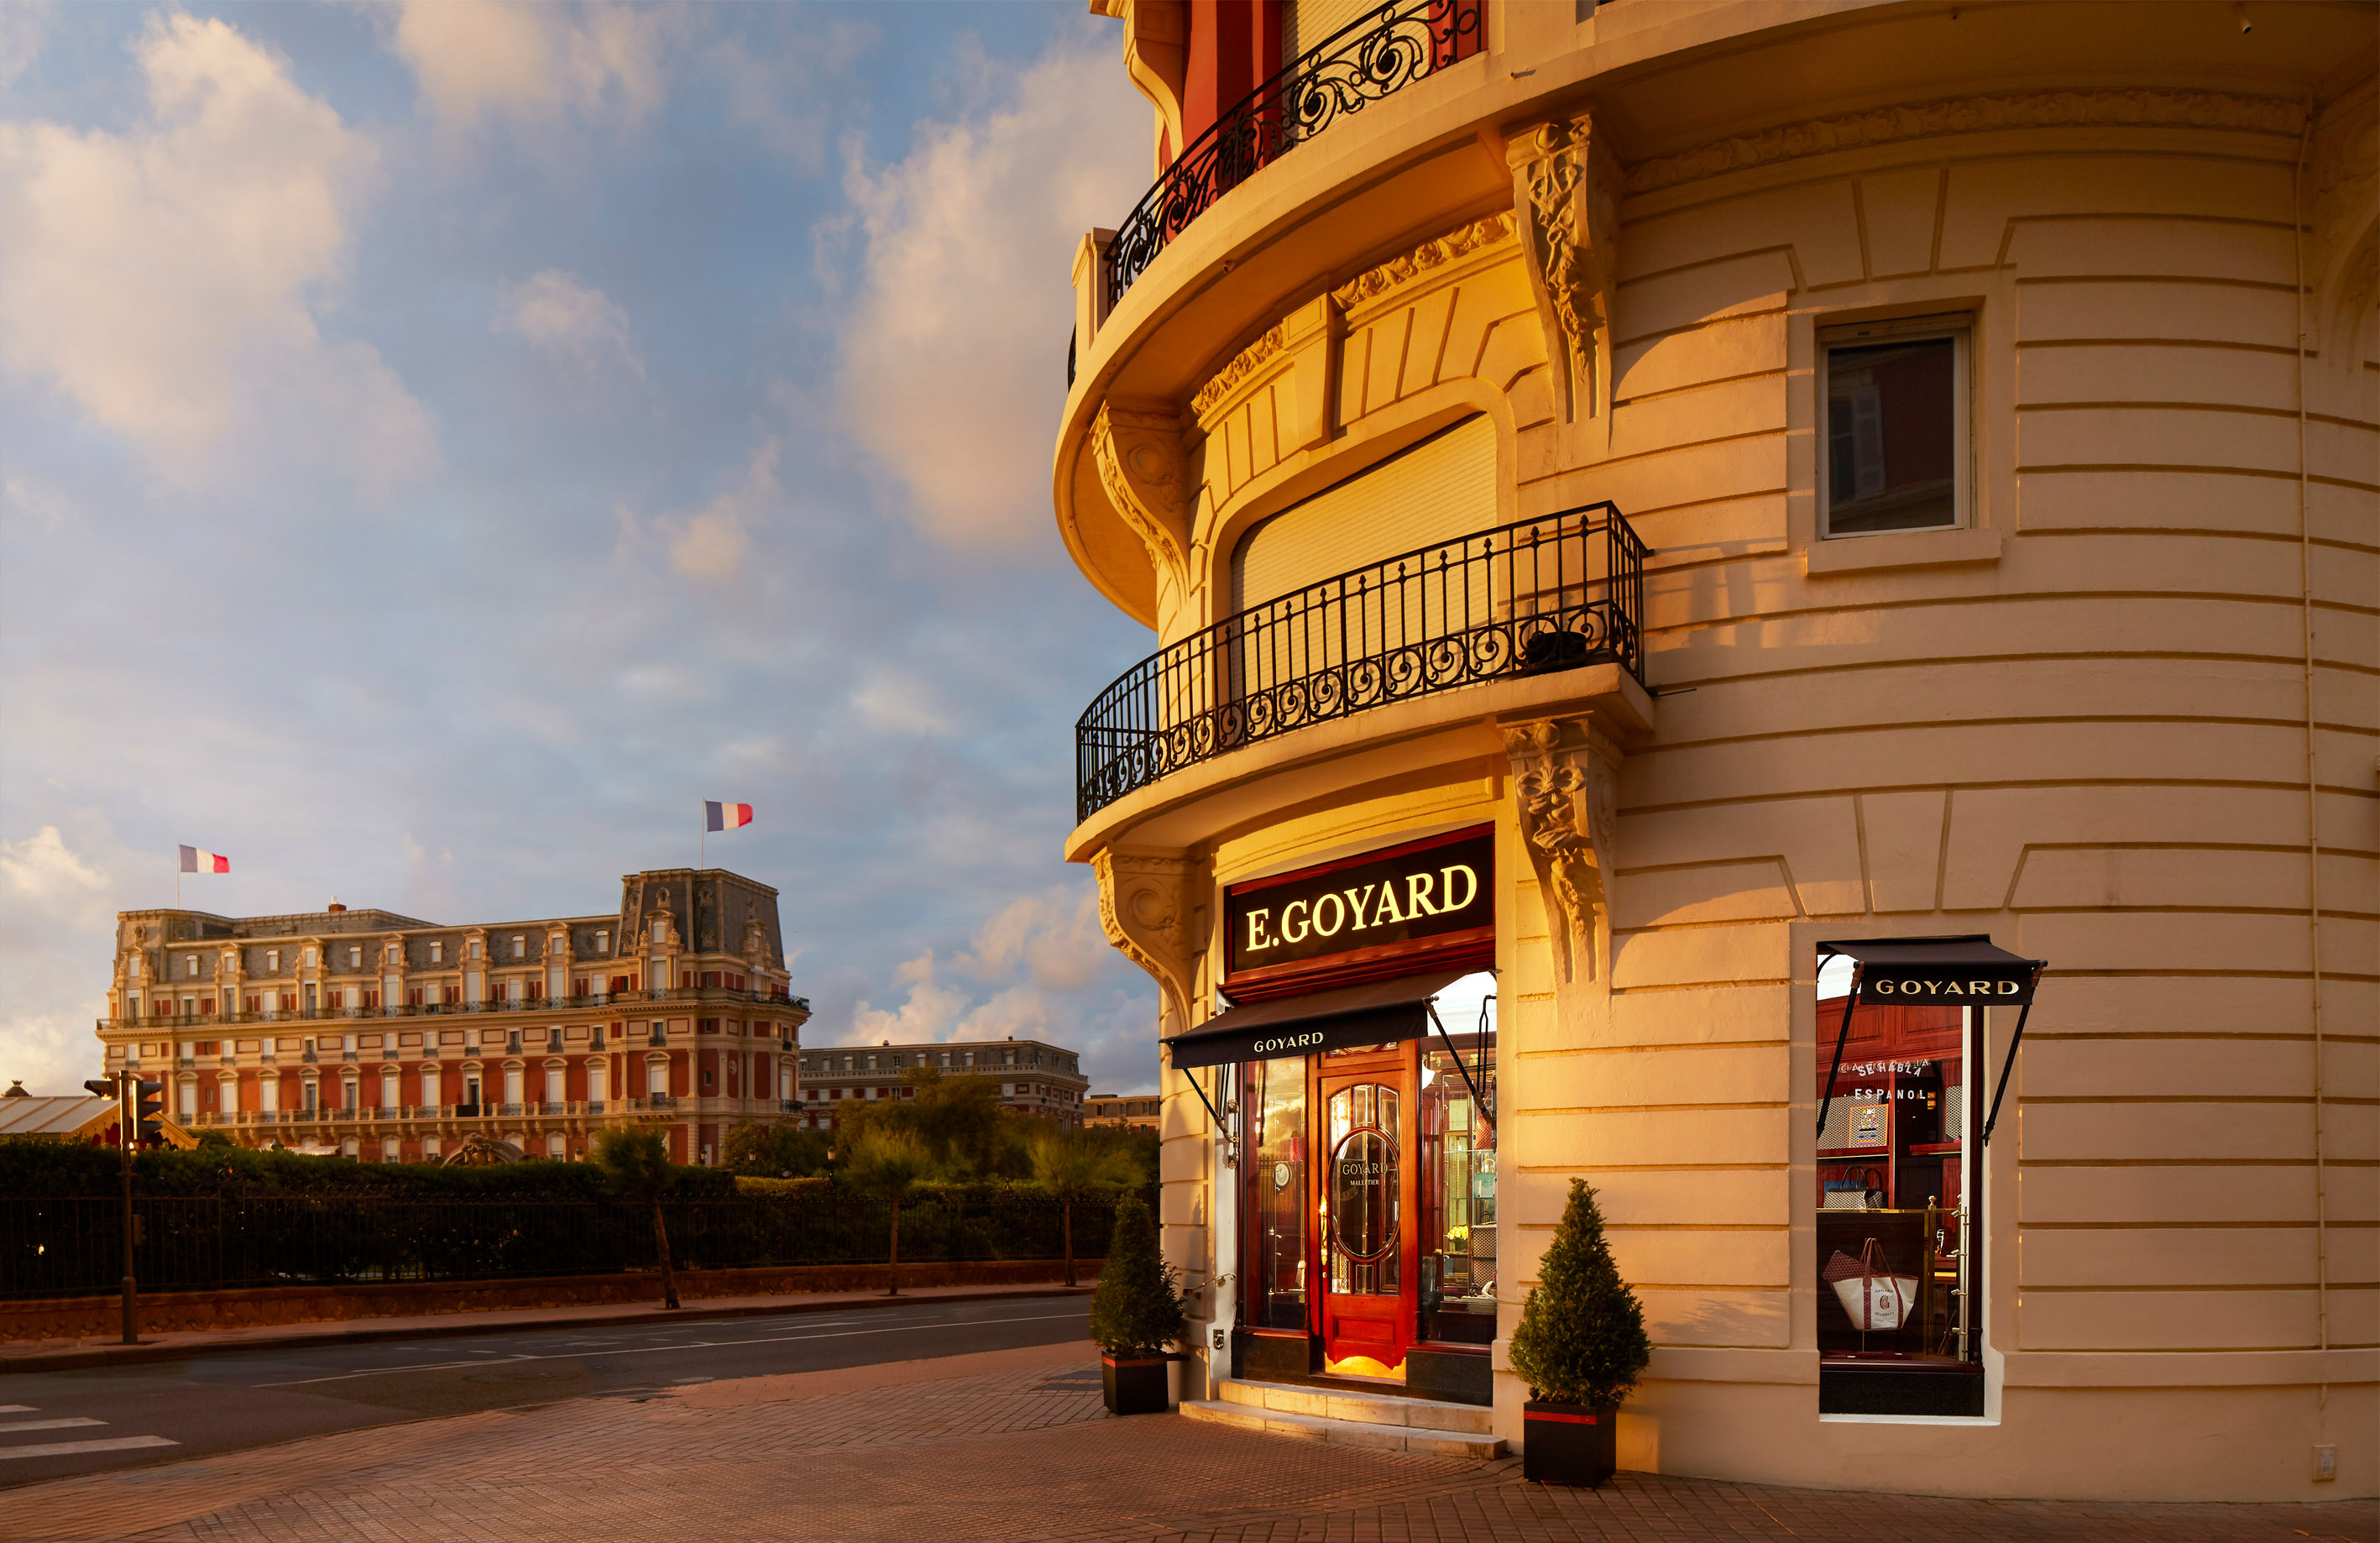 Boutique Goyard - Biarritz - France.